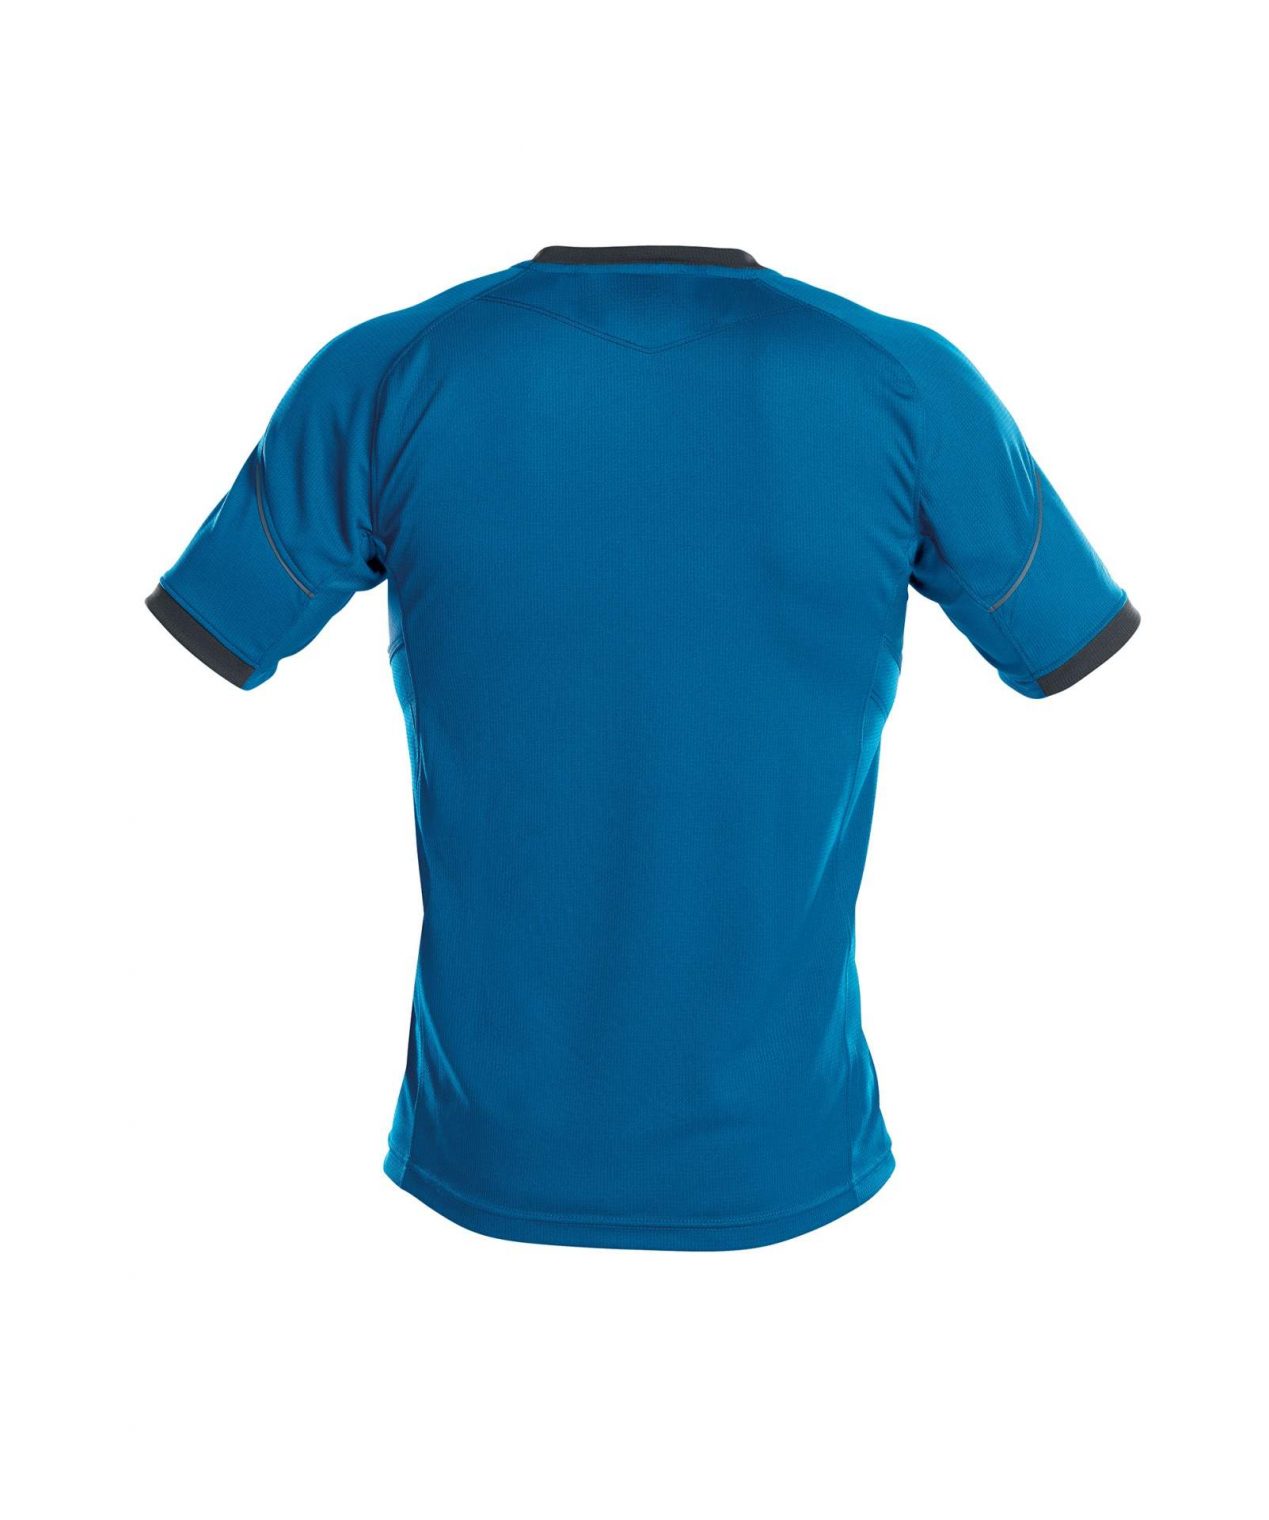 nexus t shirt azure blue anthracite grey back